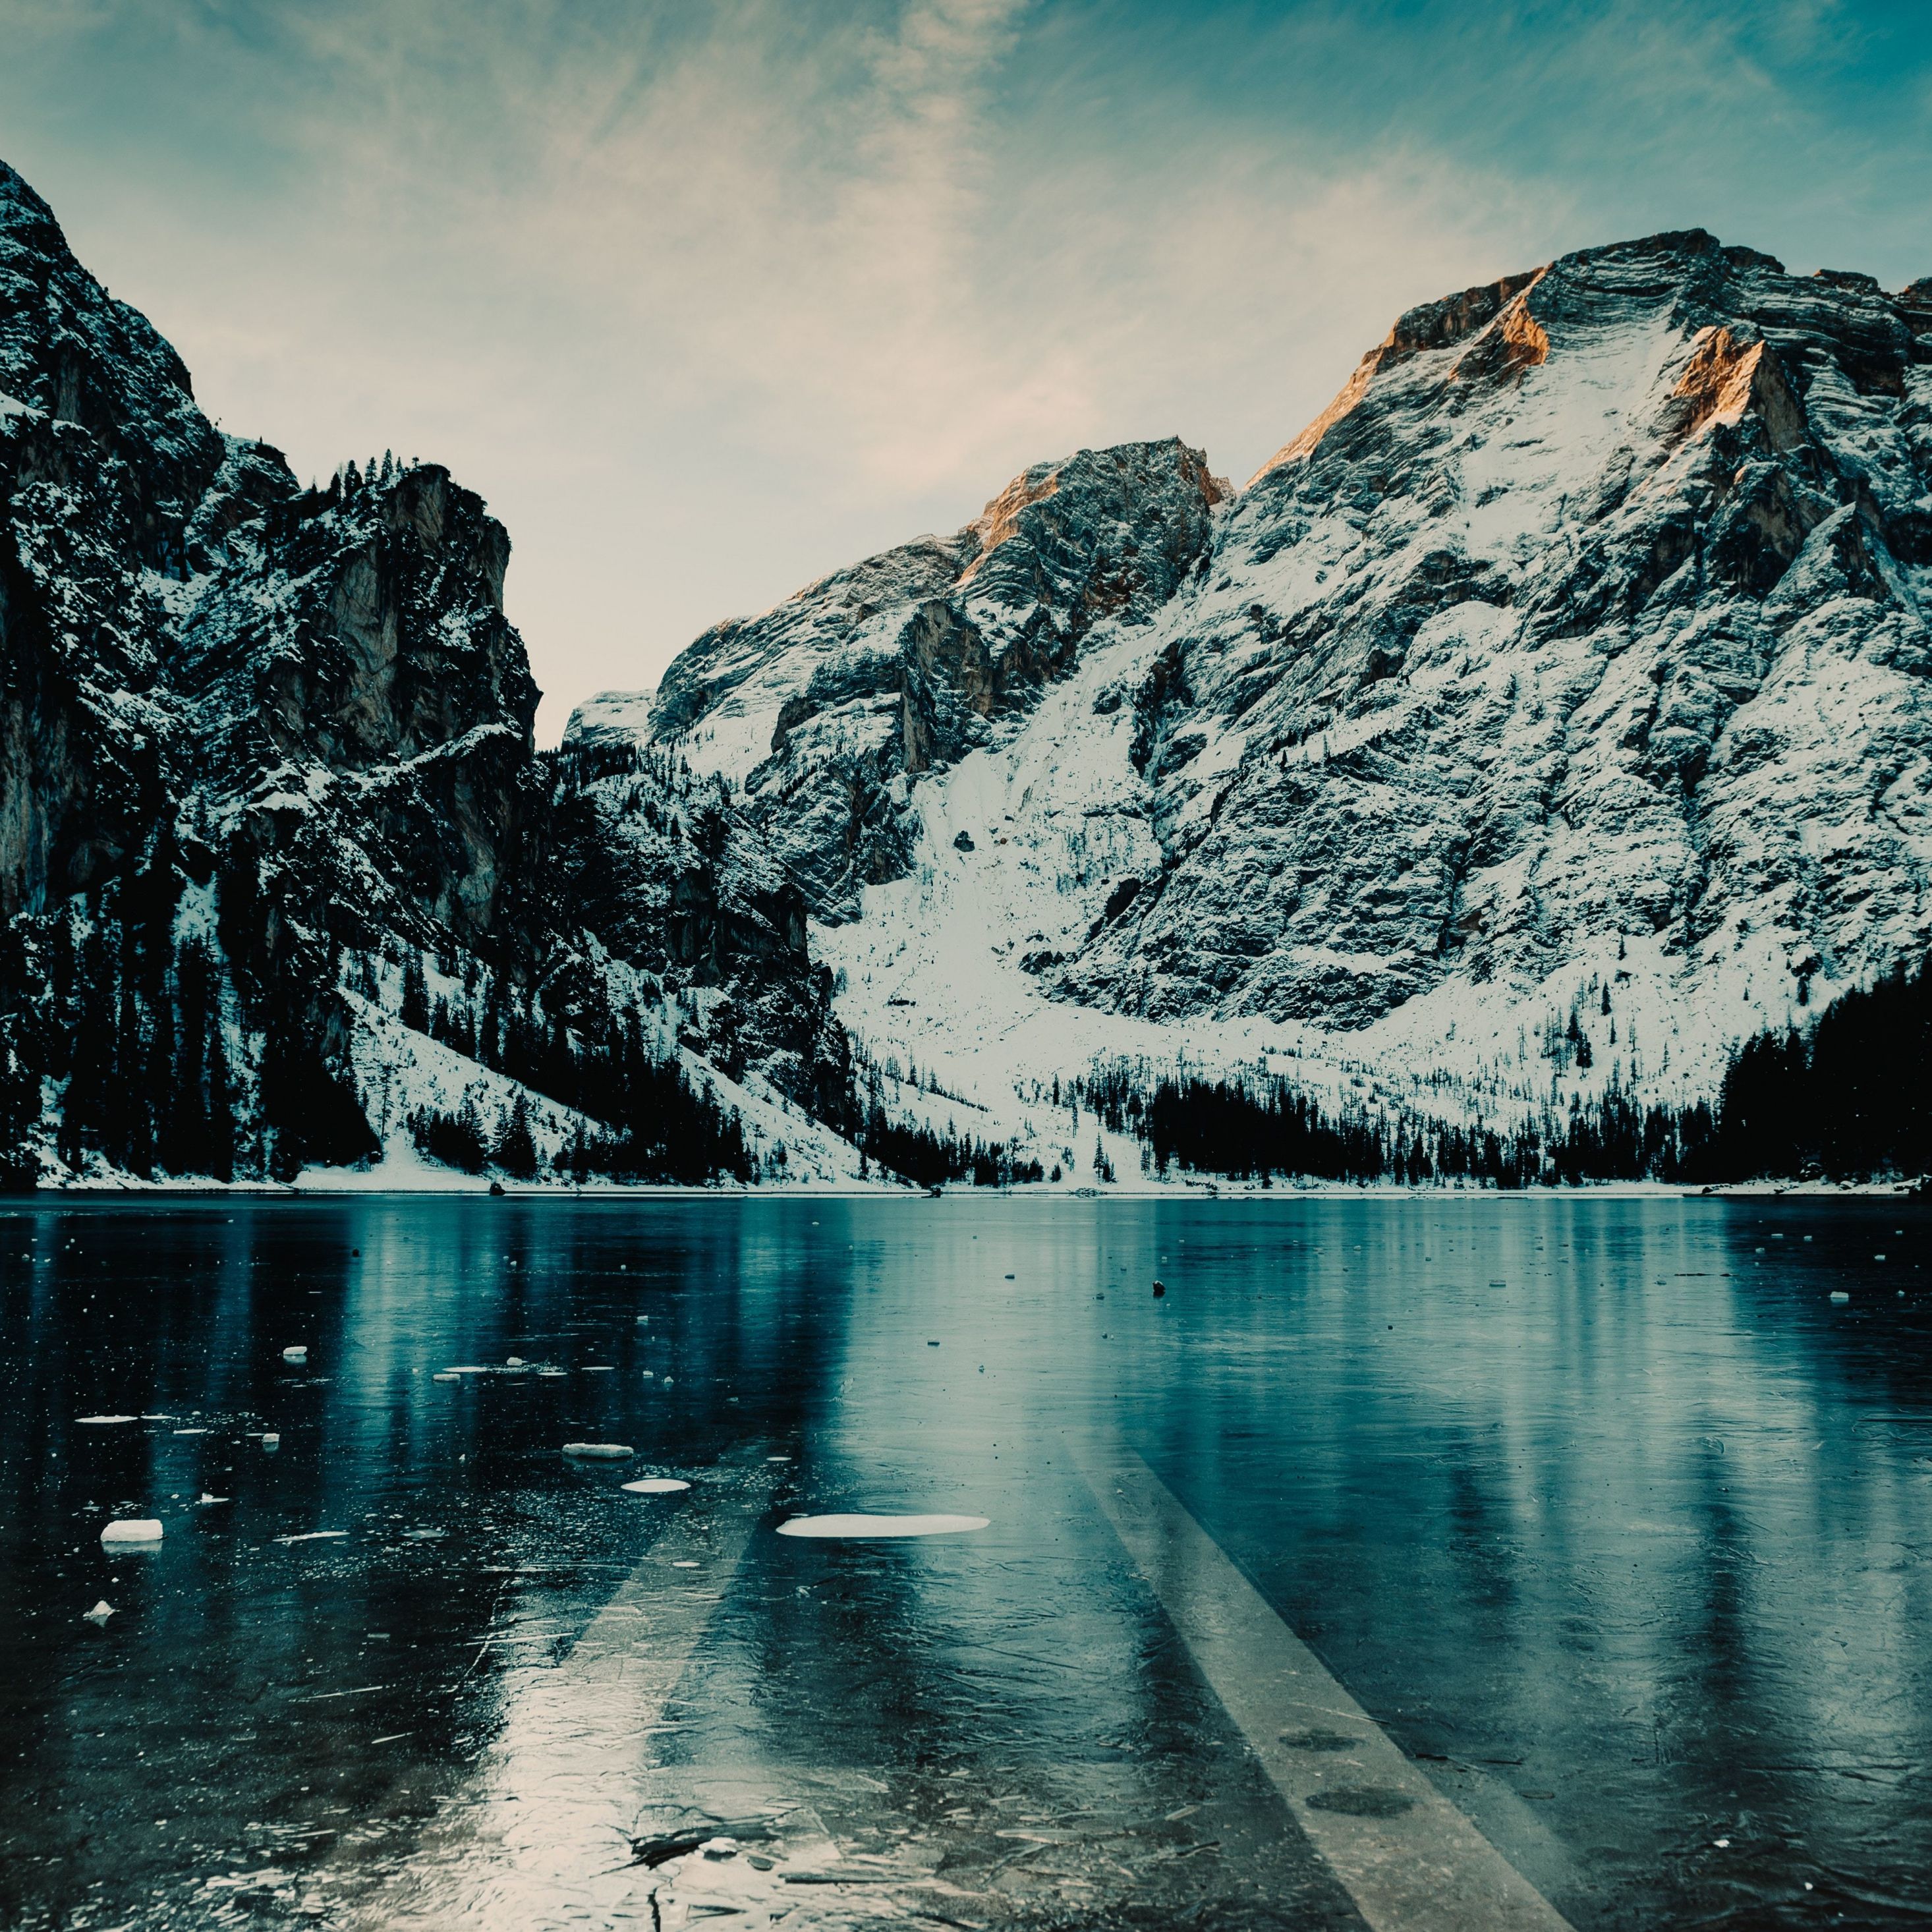 Download 2932x2932 wallpaper winter, mountains, floating ice, lake, nature, ipad pro retina, 2932x2932 HD image, background, 9598